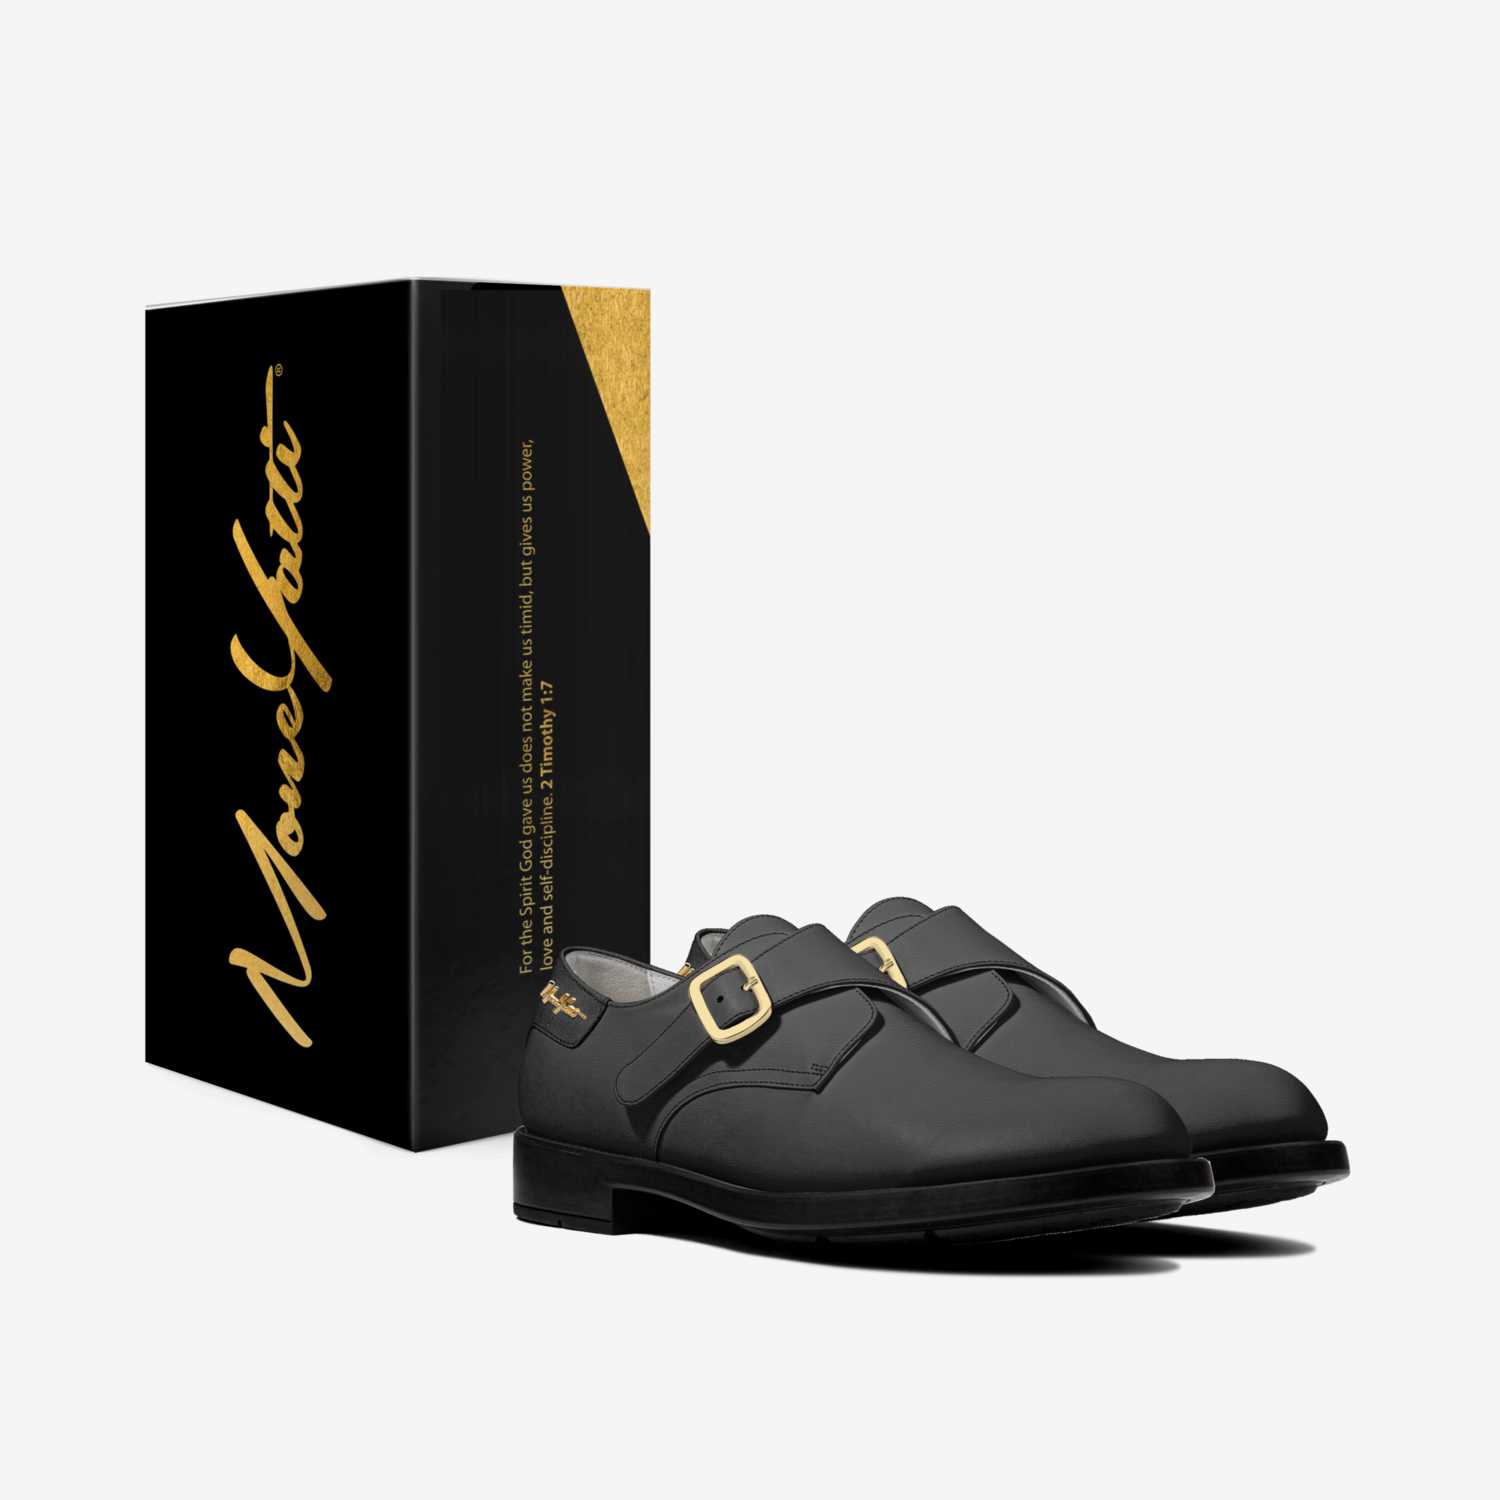 ELEGANTDRIP 025 custom made in Italy shoes by Moneyatti Brand | Box view